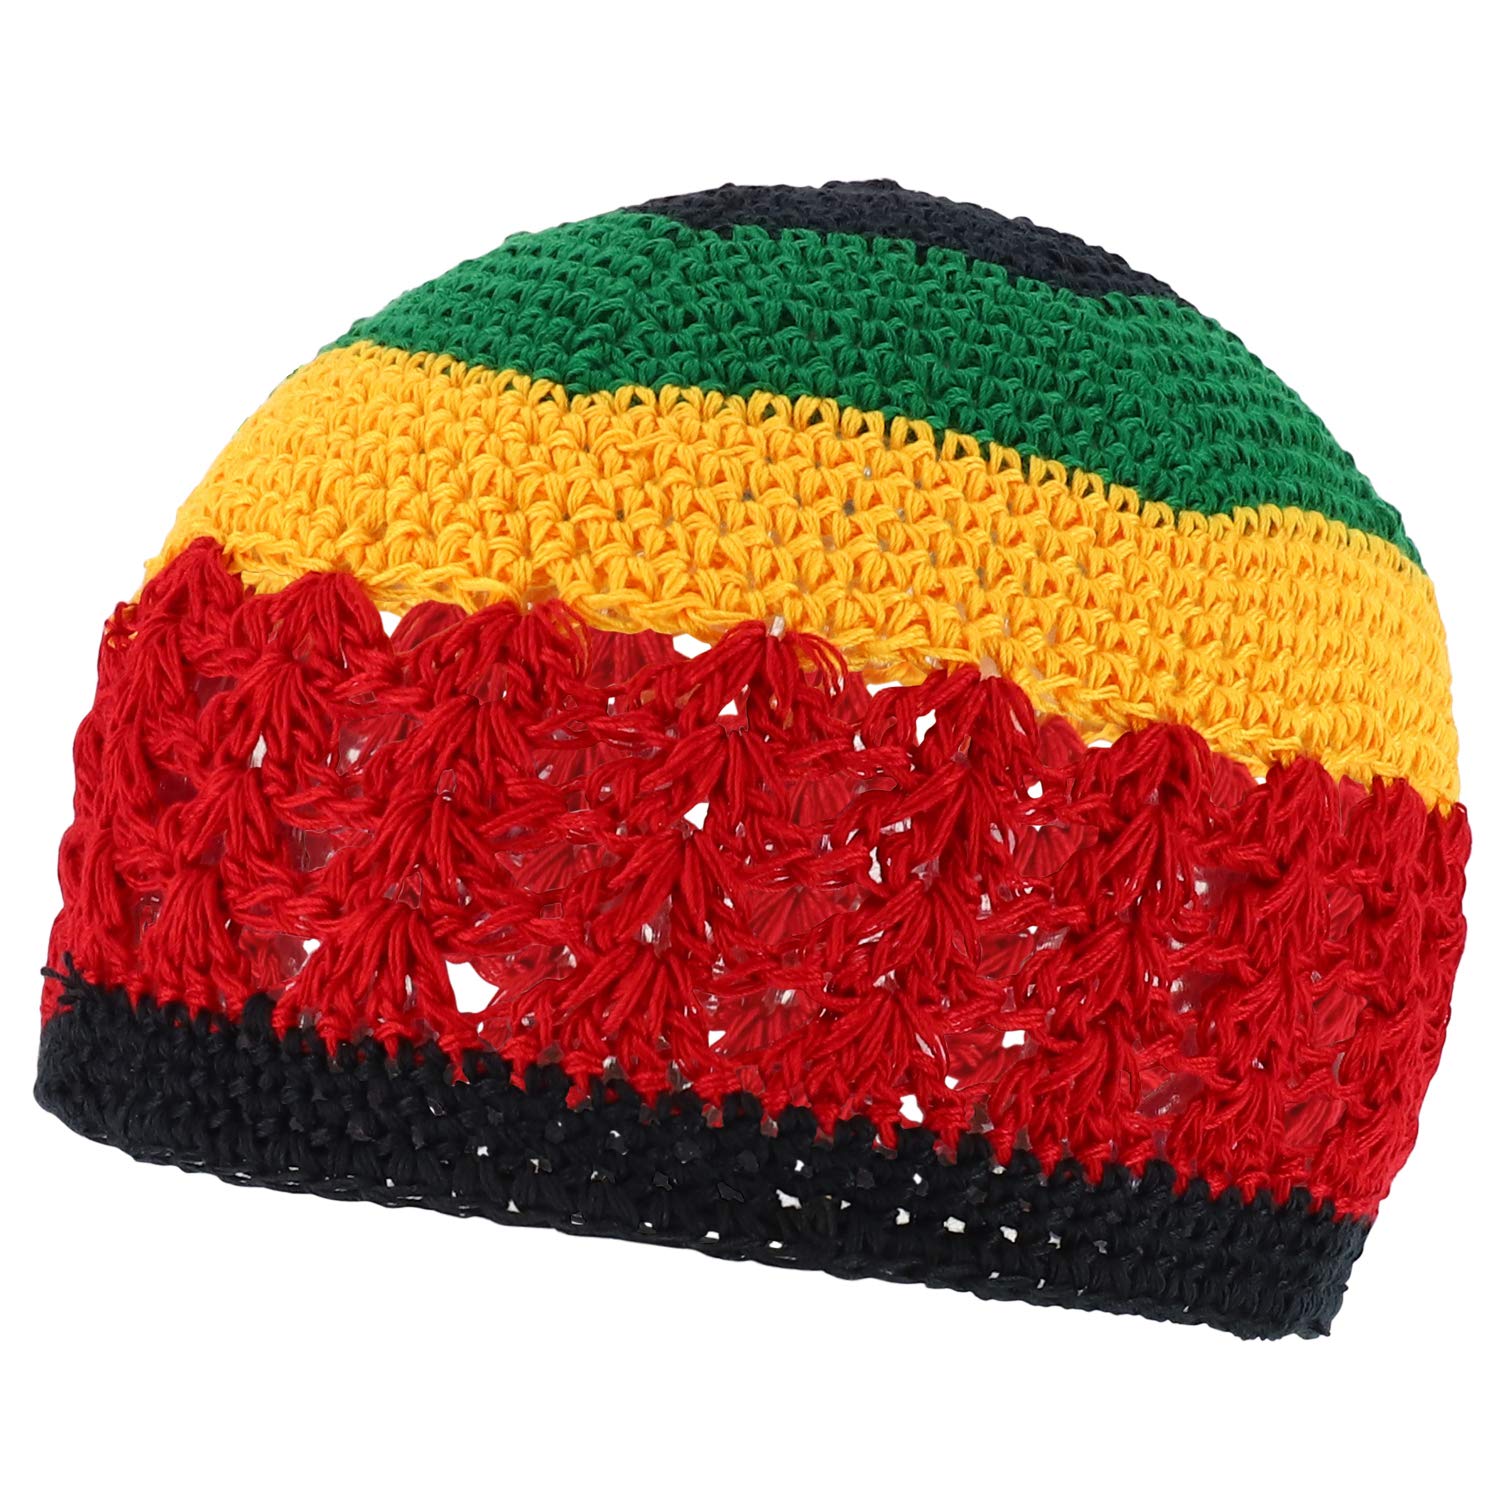 Armycrew Rasta Jamaica Crochet Knit Stretchable Skull Beanie Hat